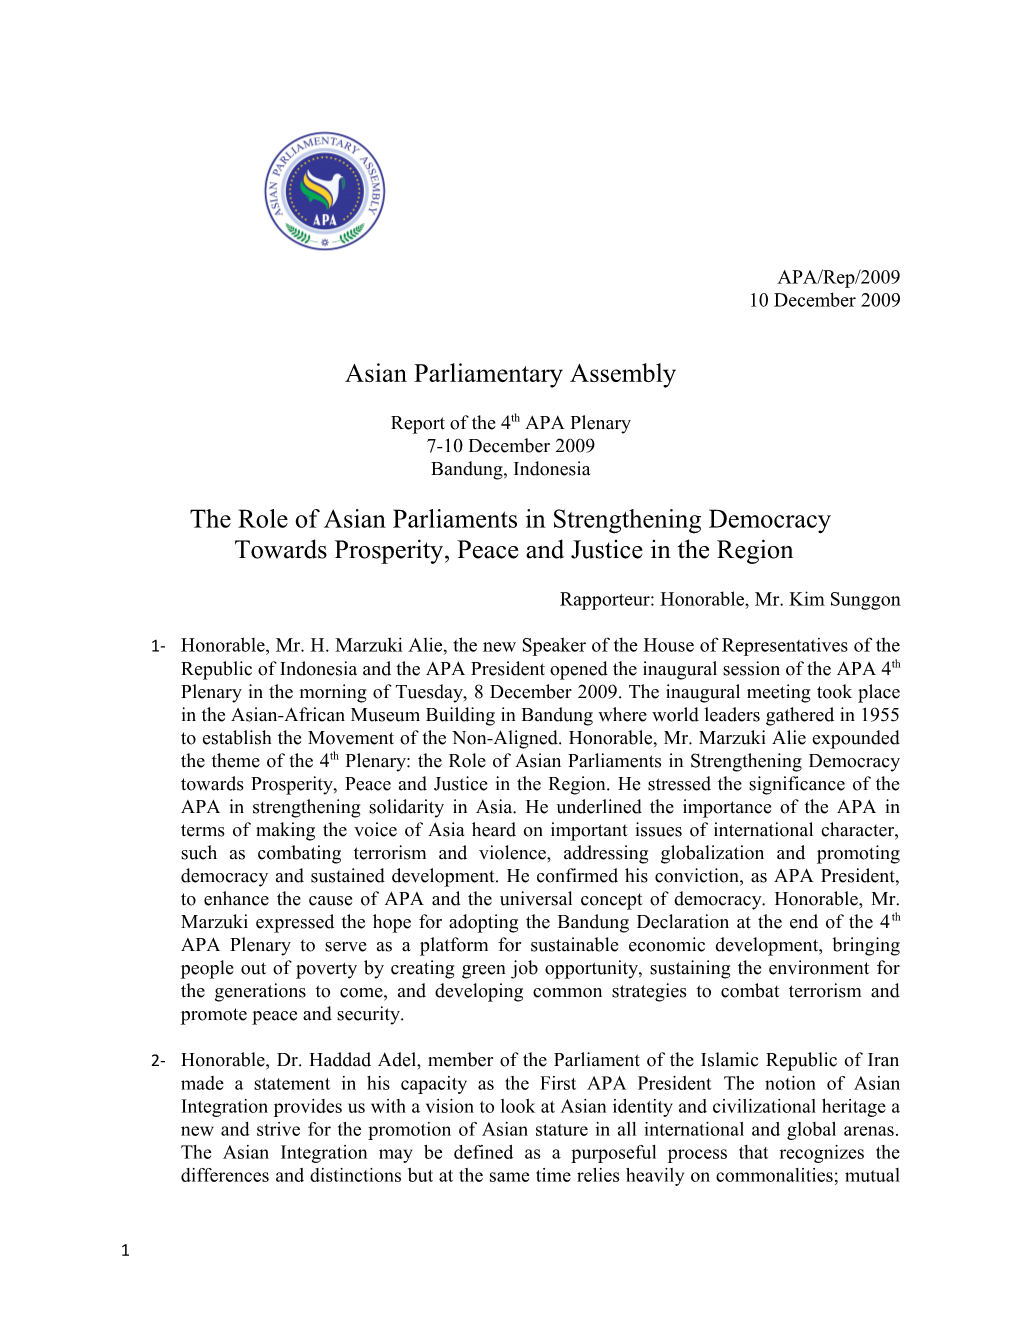 Report of the 4Th APA Plenary